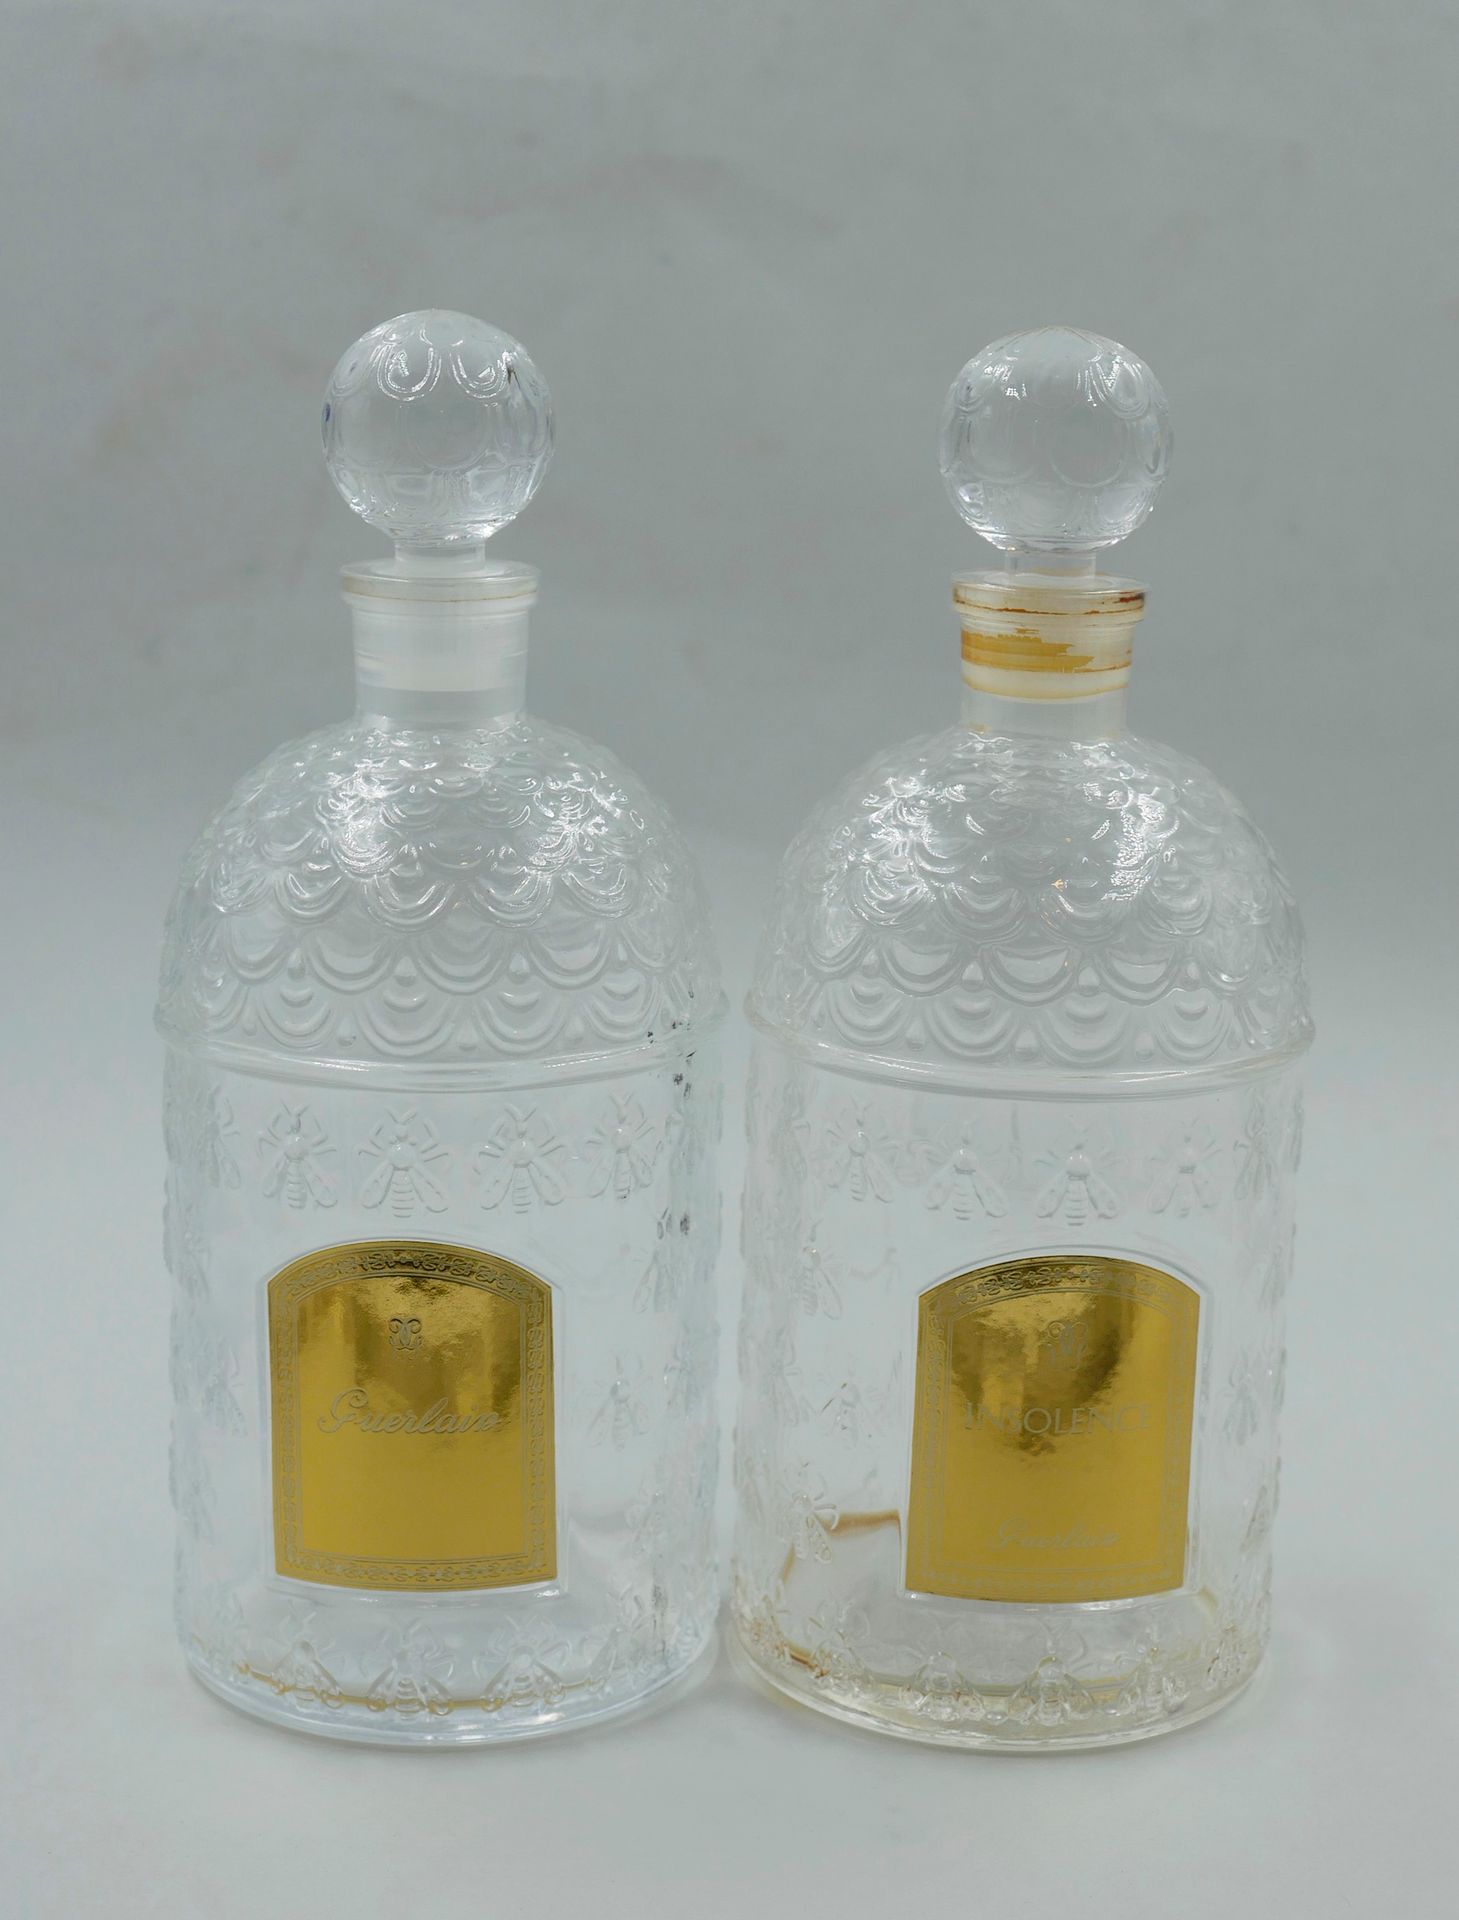 Null 顾尔良。

一套2个香水瓶，一个是Insolence，另一个是没有名字的。

高度：20厘米。有箱子。